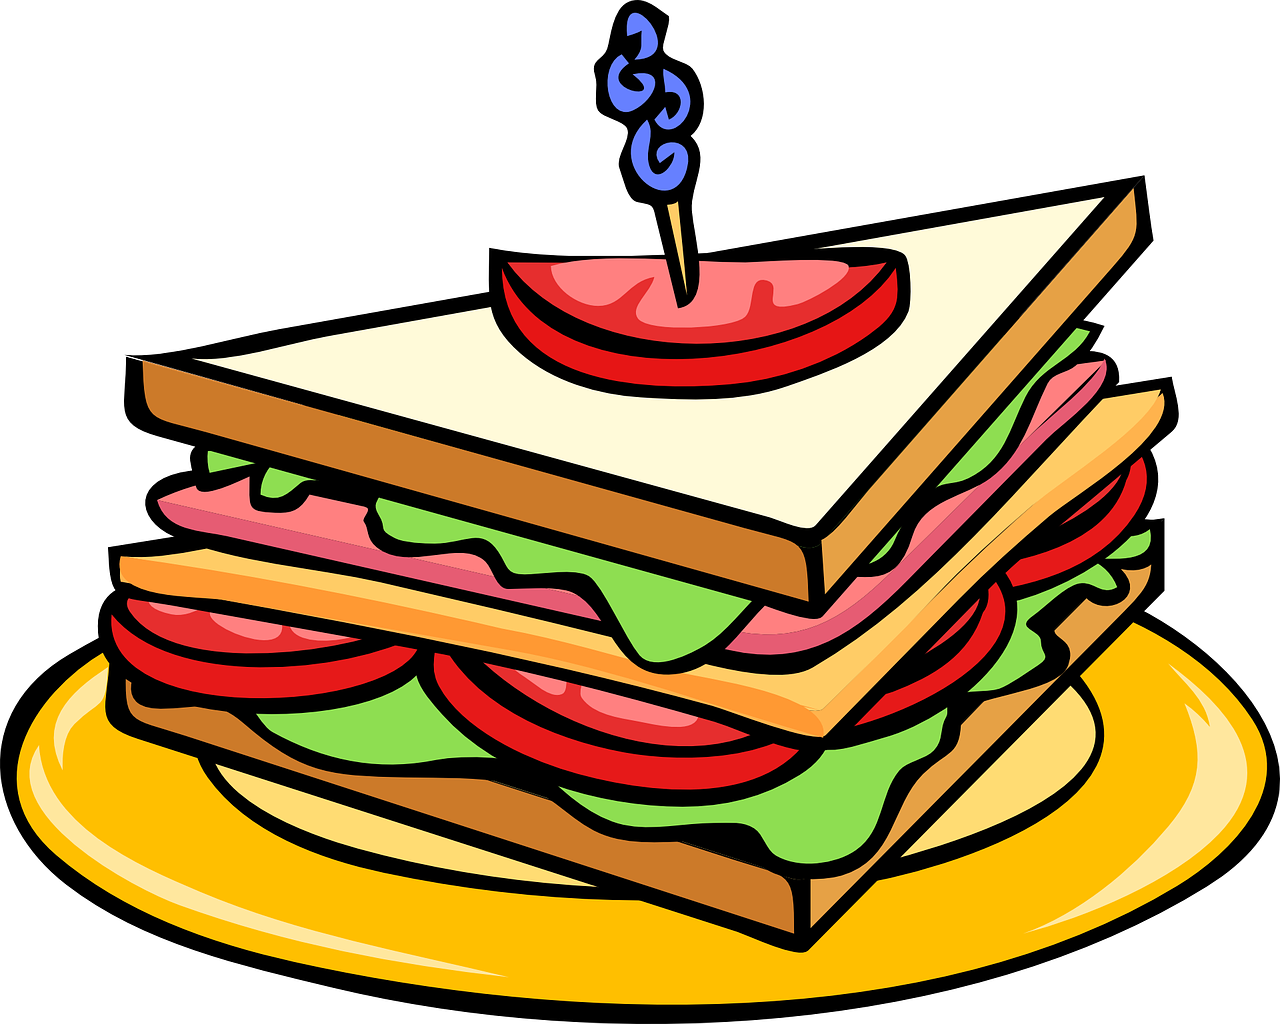 club sandwich triangle food free photo